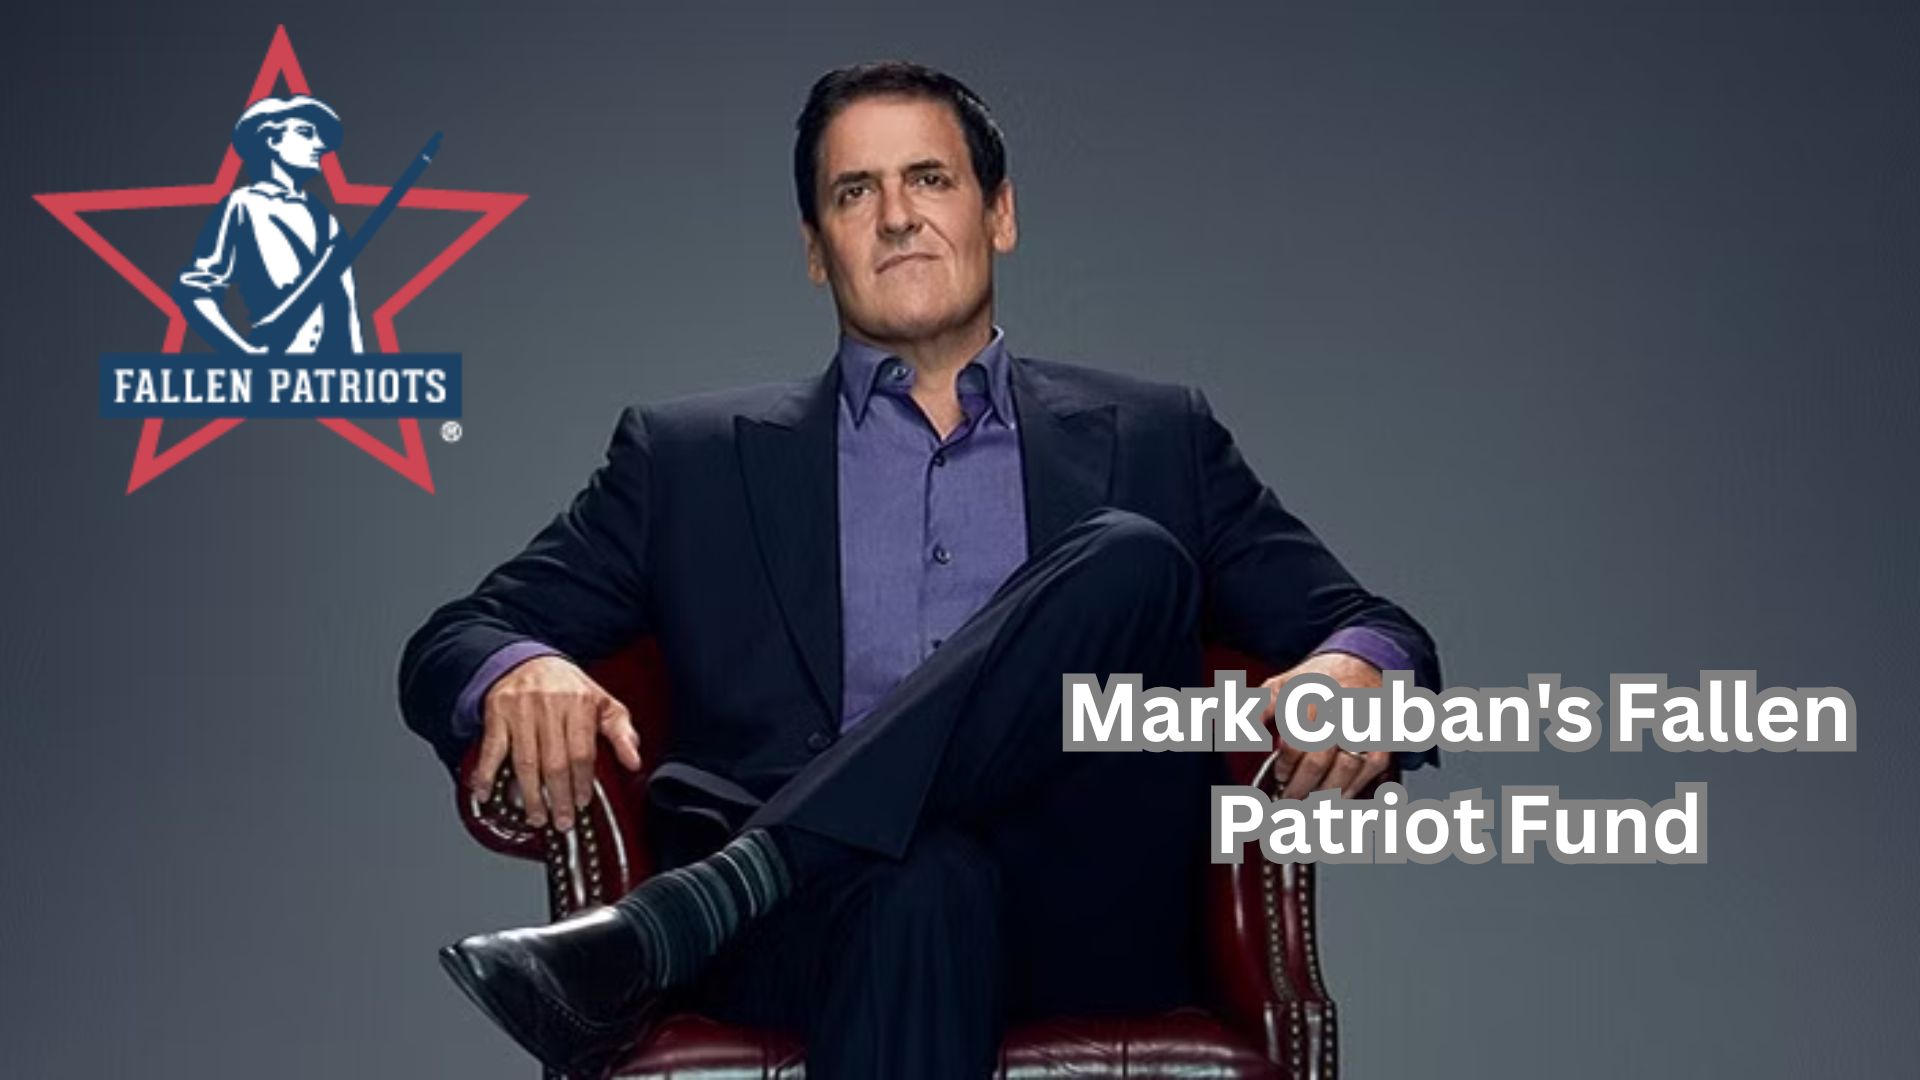 Mark Cuban's Fallen Patriot Fund.